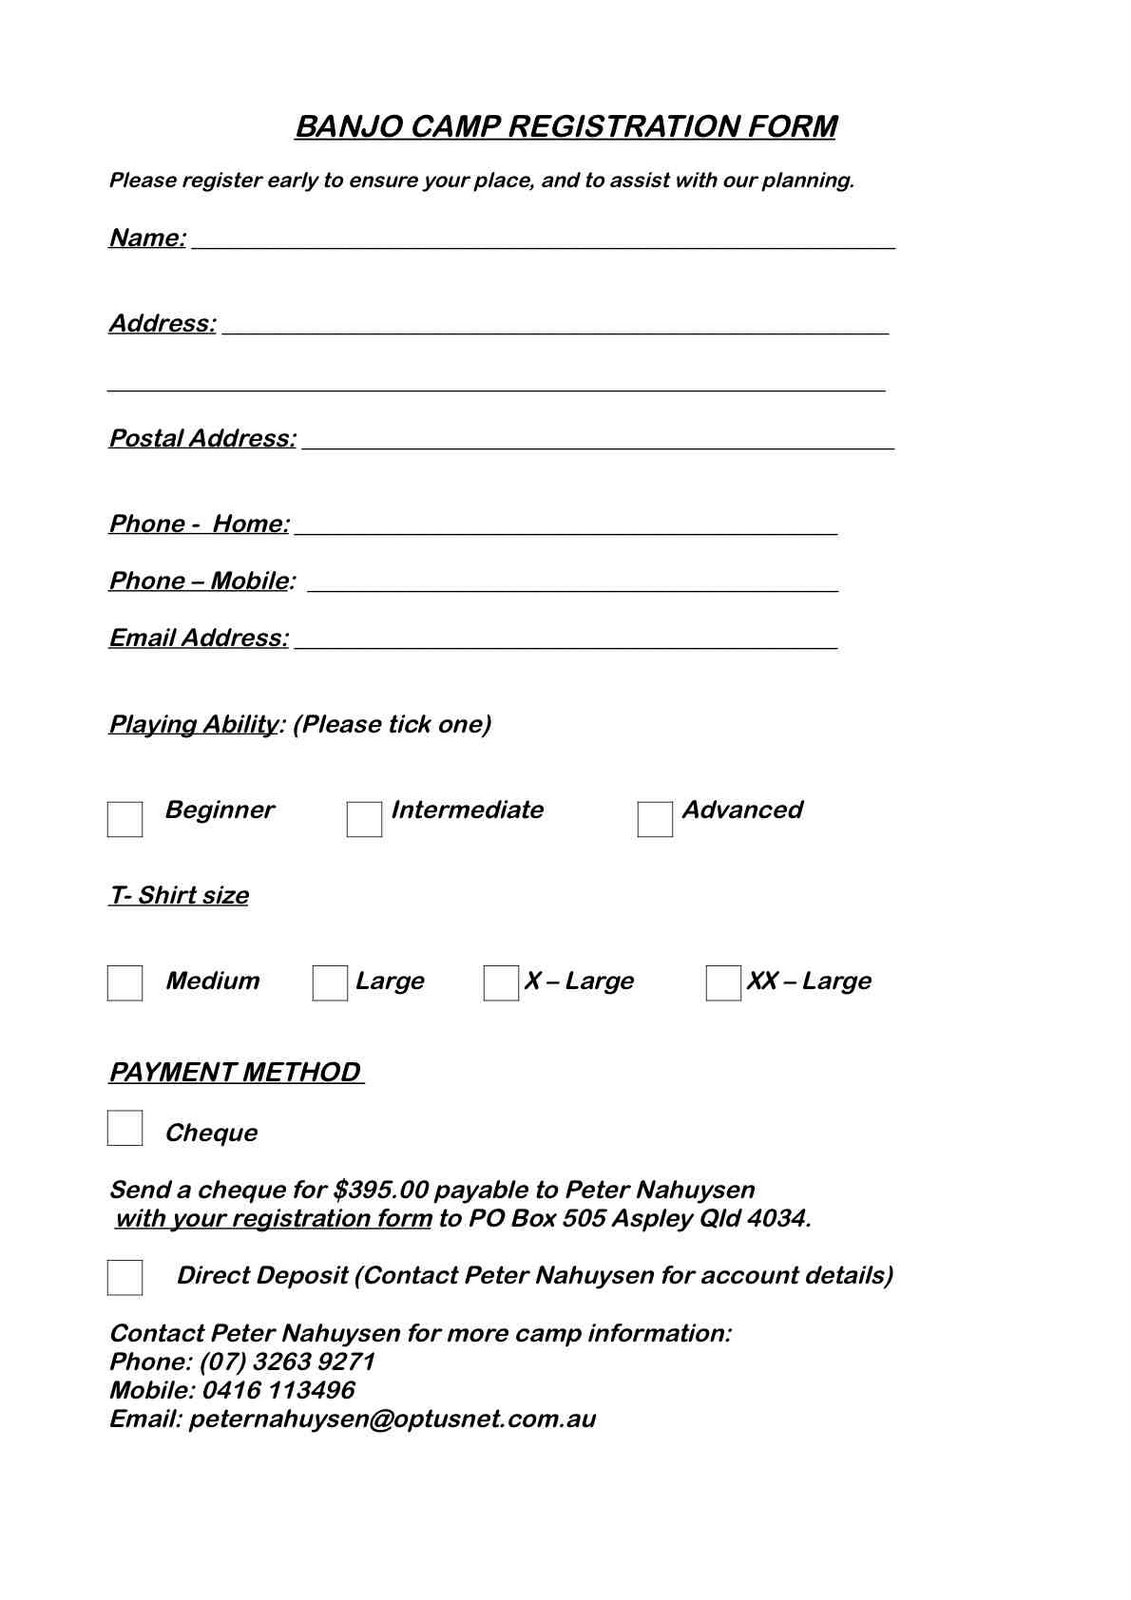 Wendys Application Form